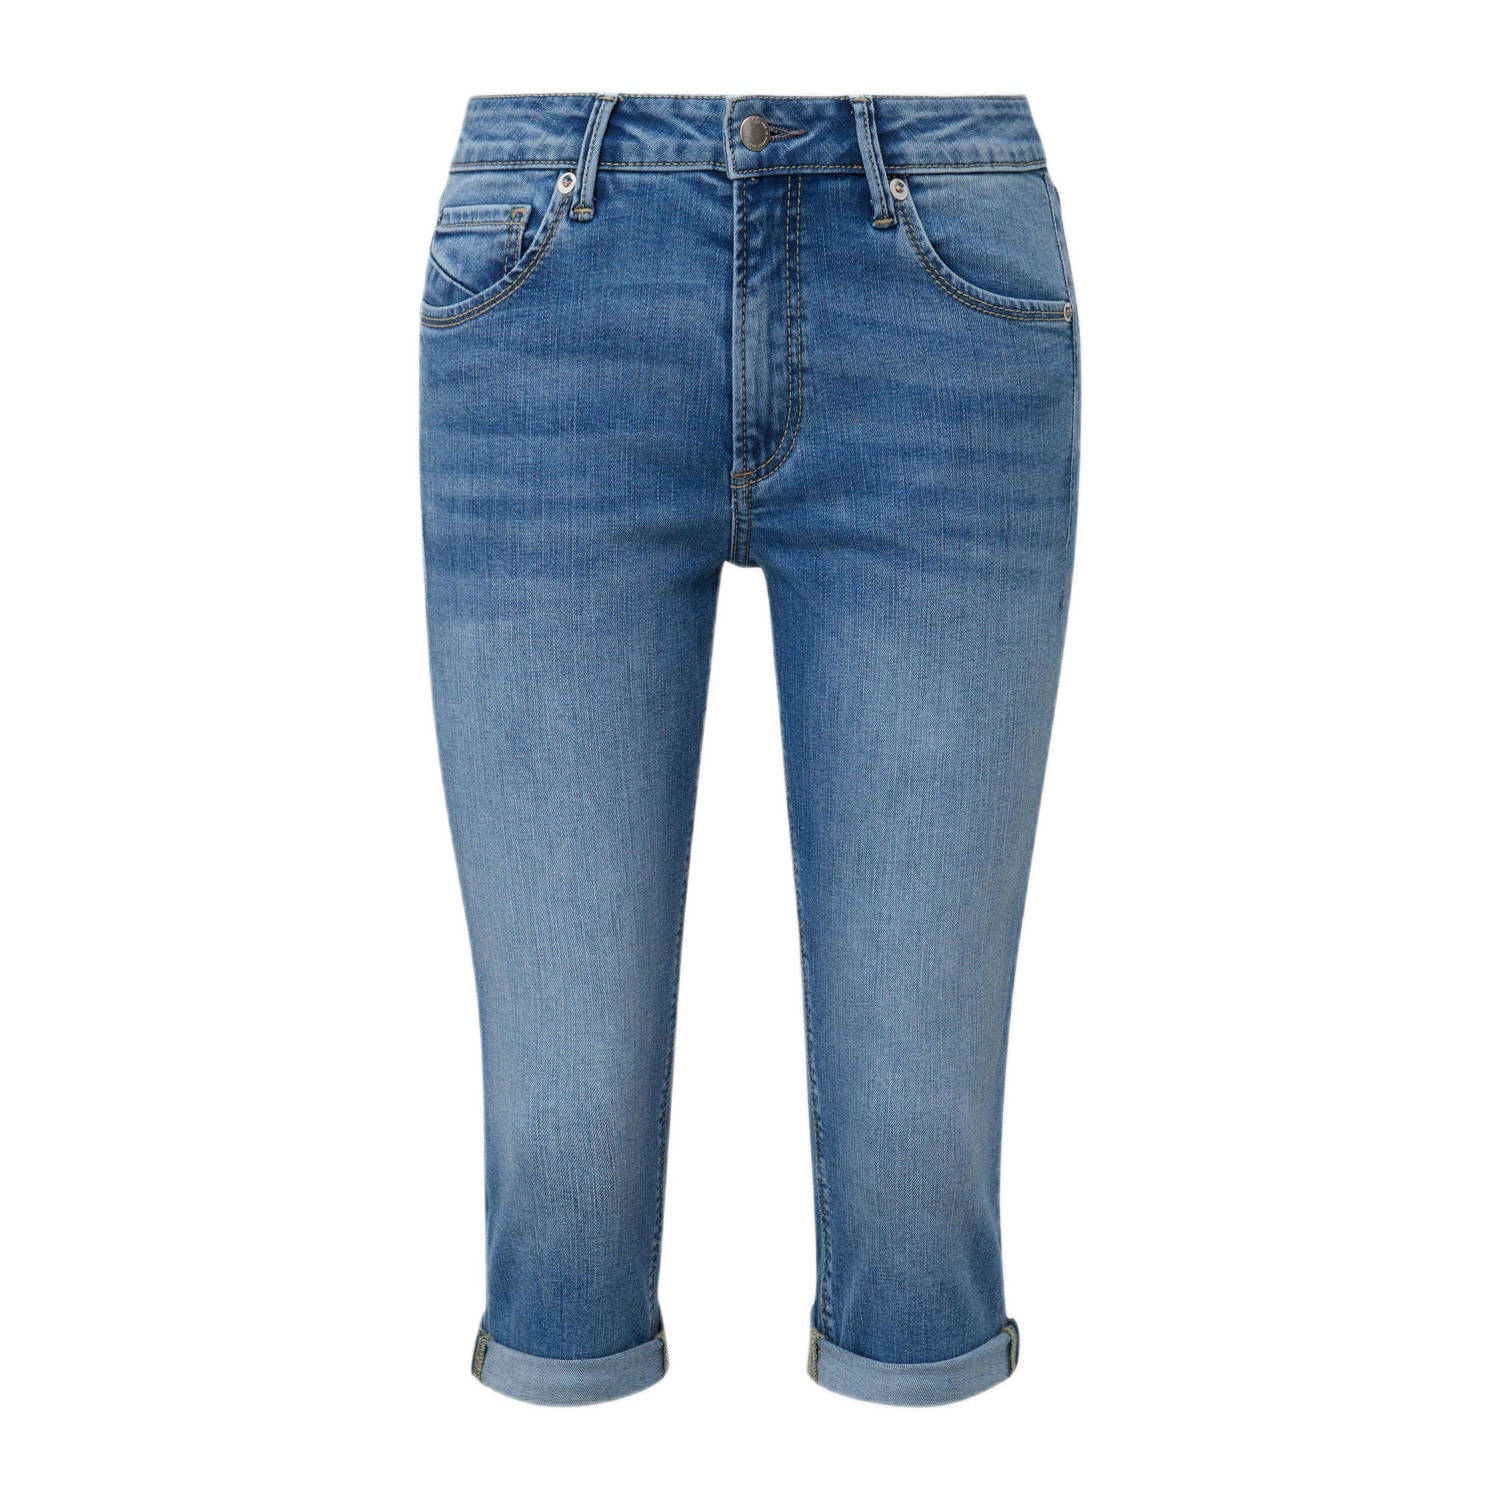 Q S by s.Oliver capri jeans light blue